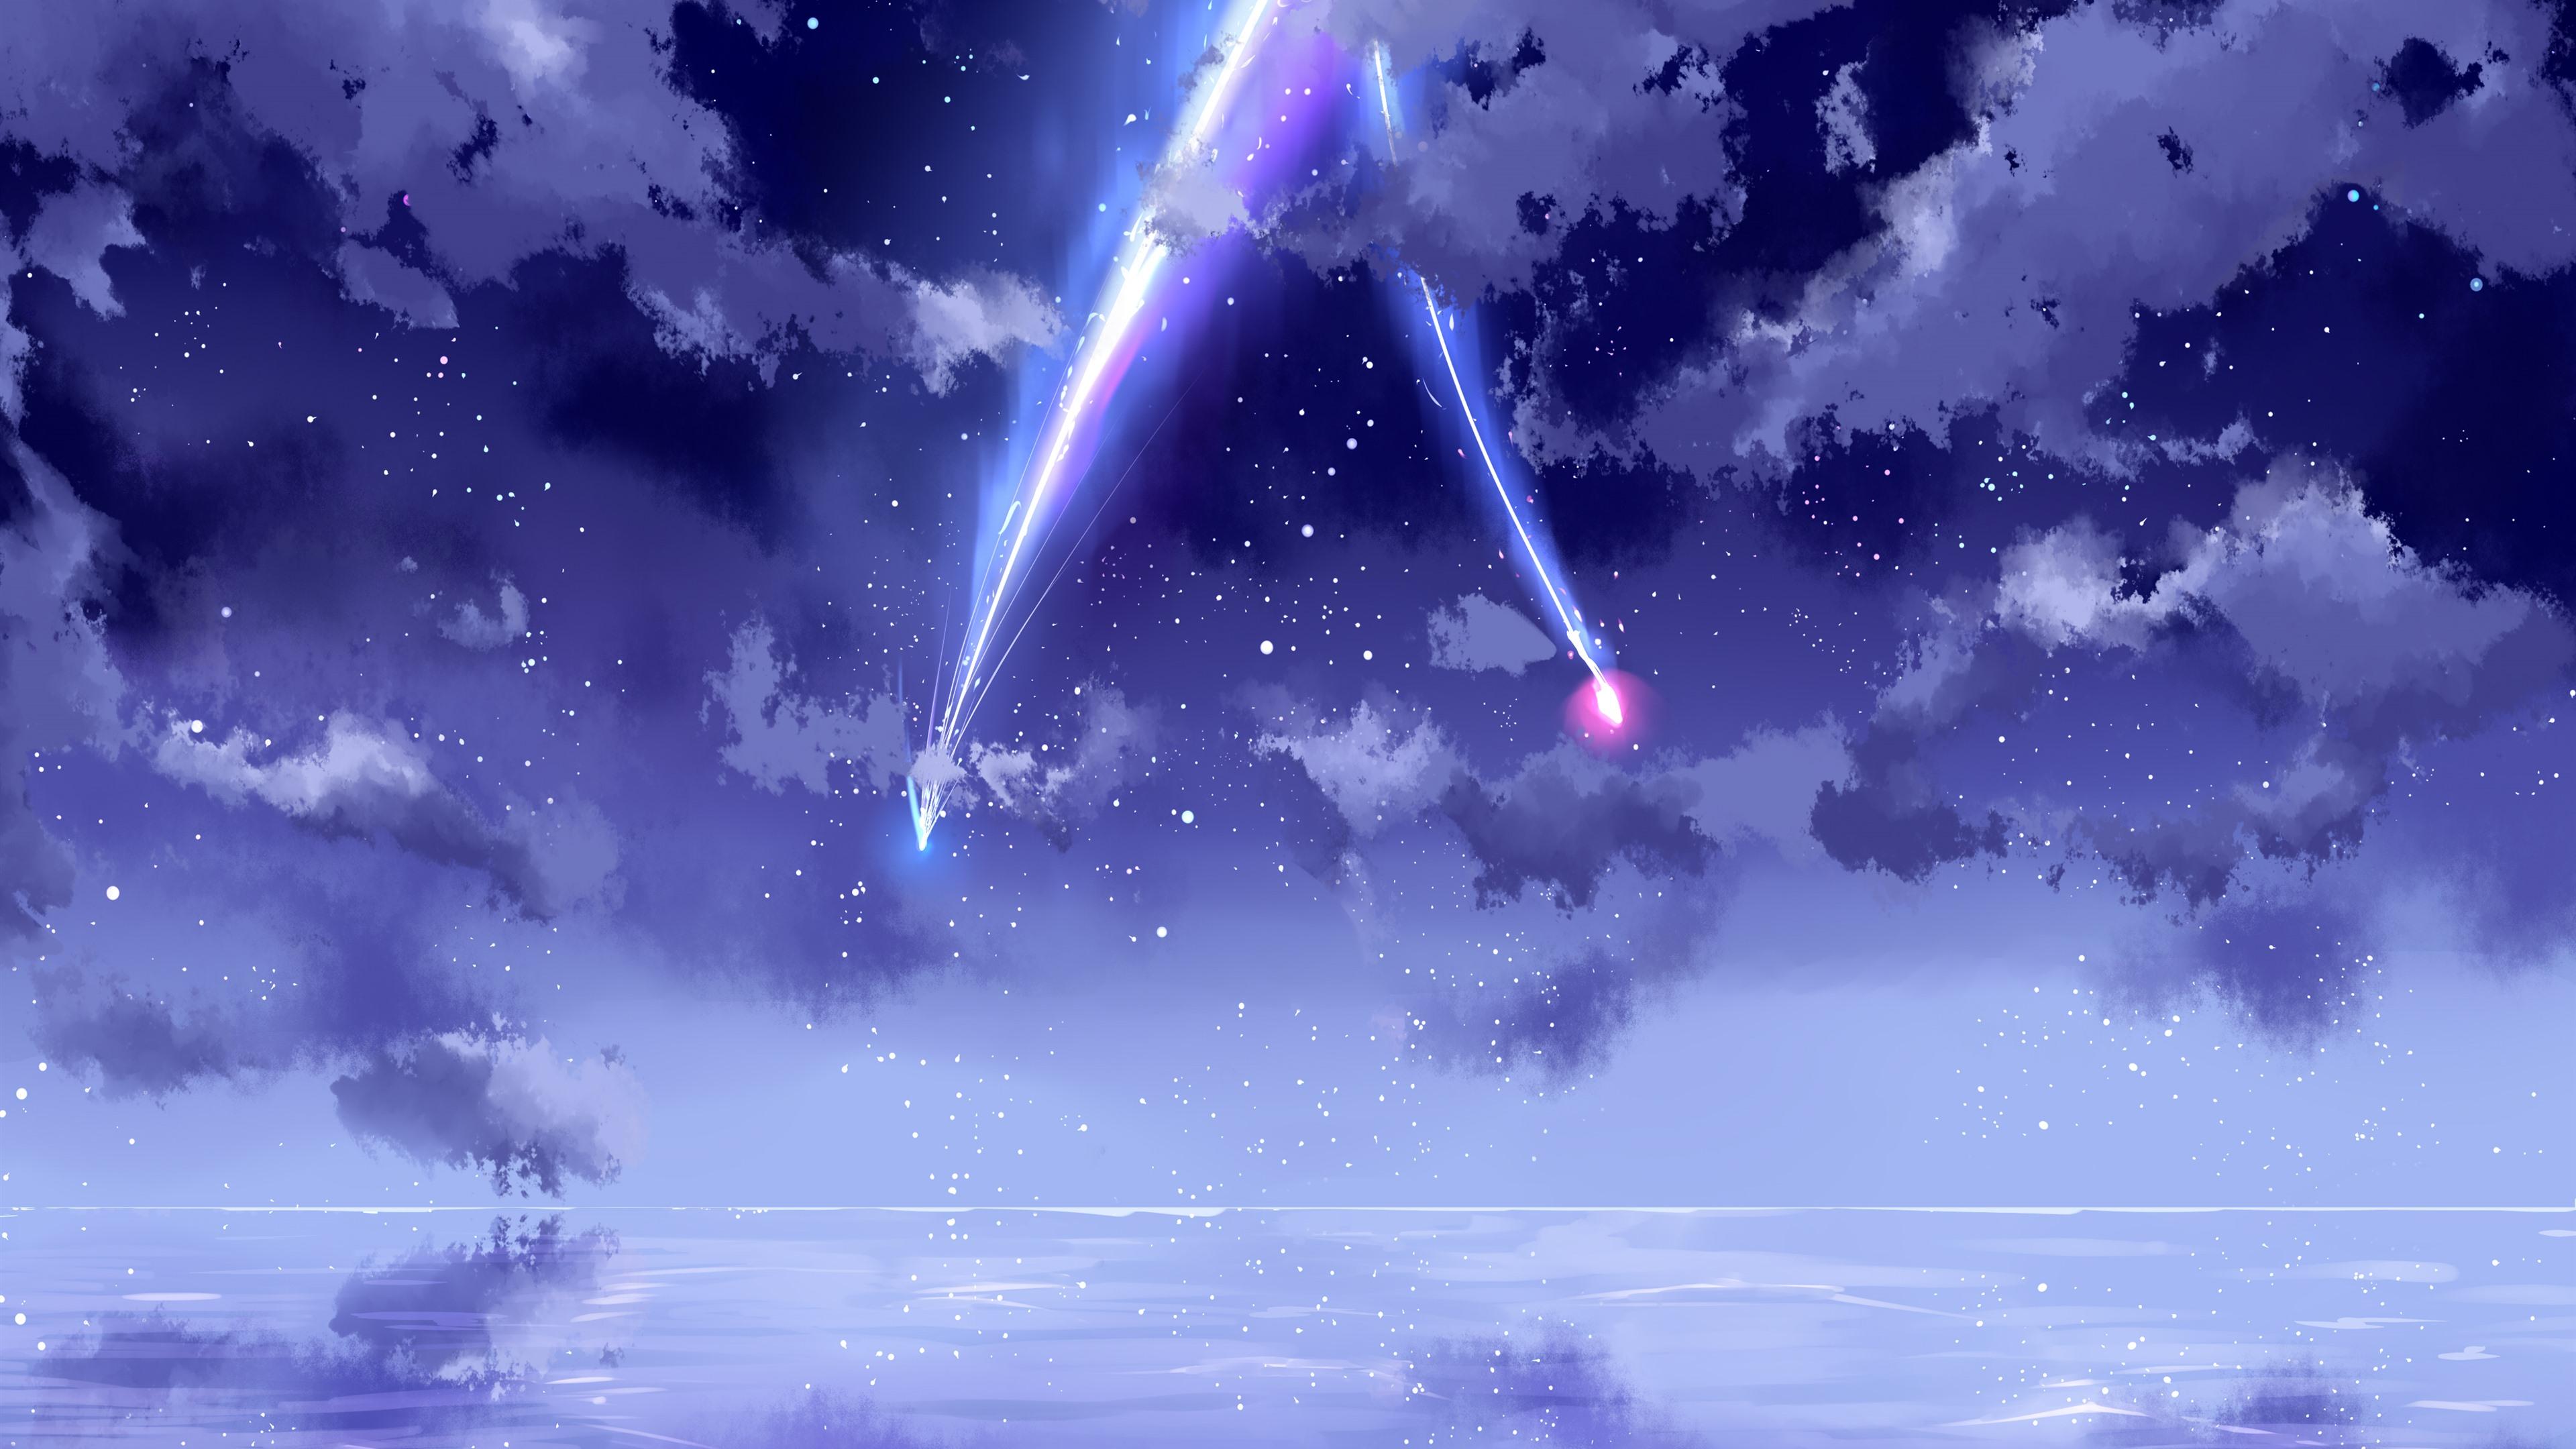 Wallpapers Your Name, beautiful sky, meteor, anime 3840x2160 UHD 4K